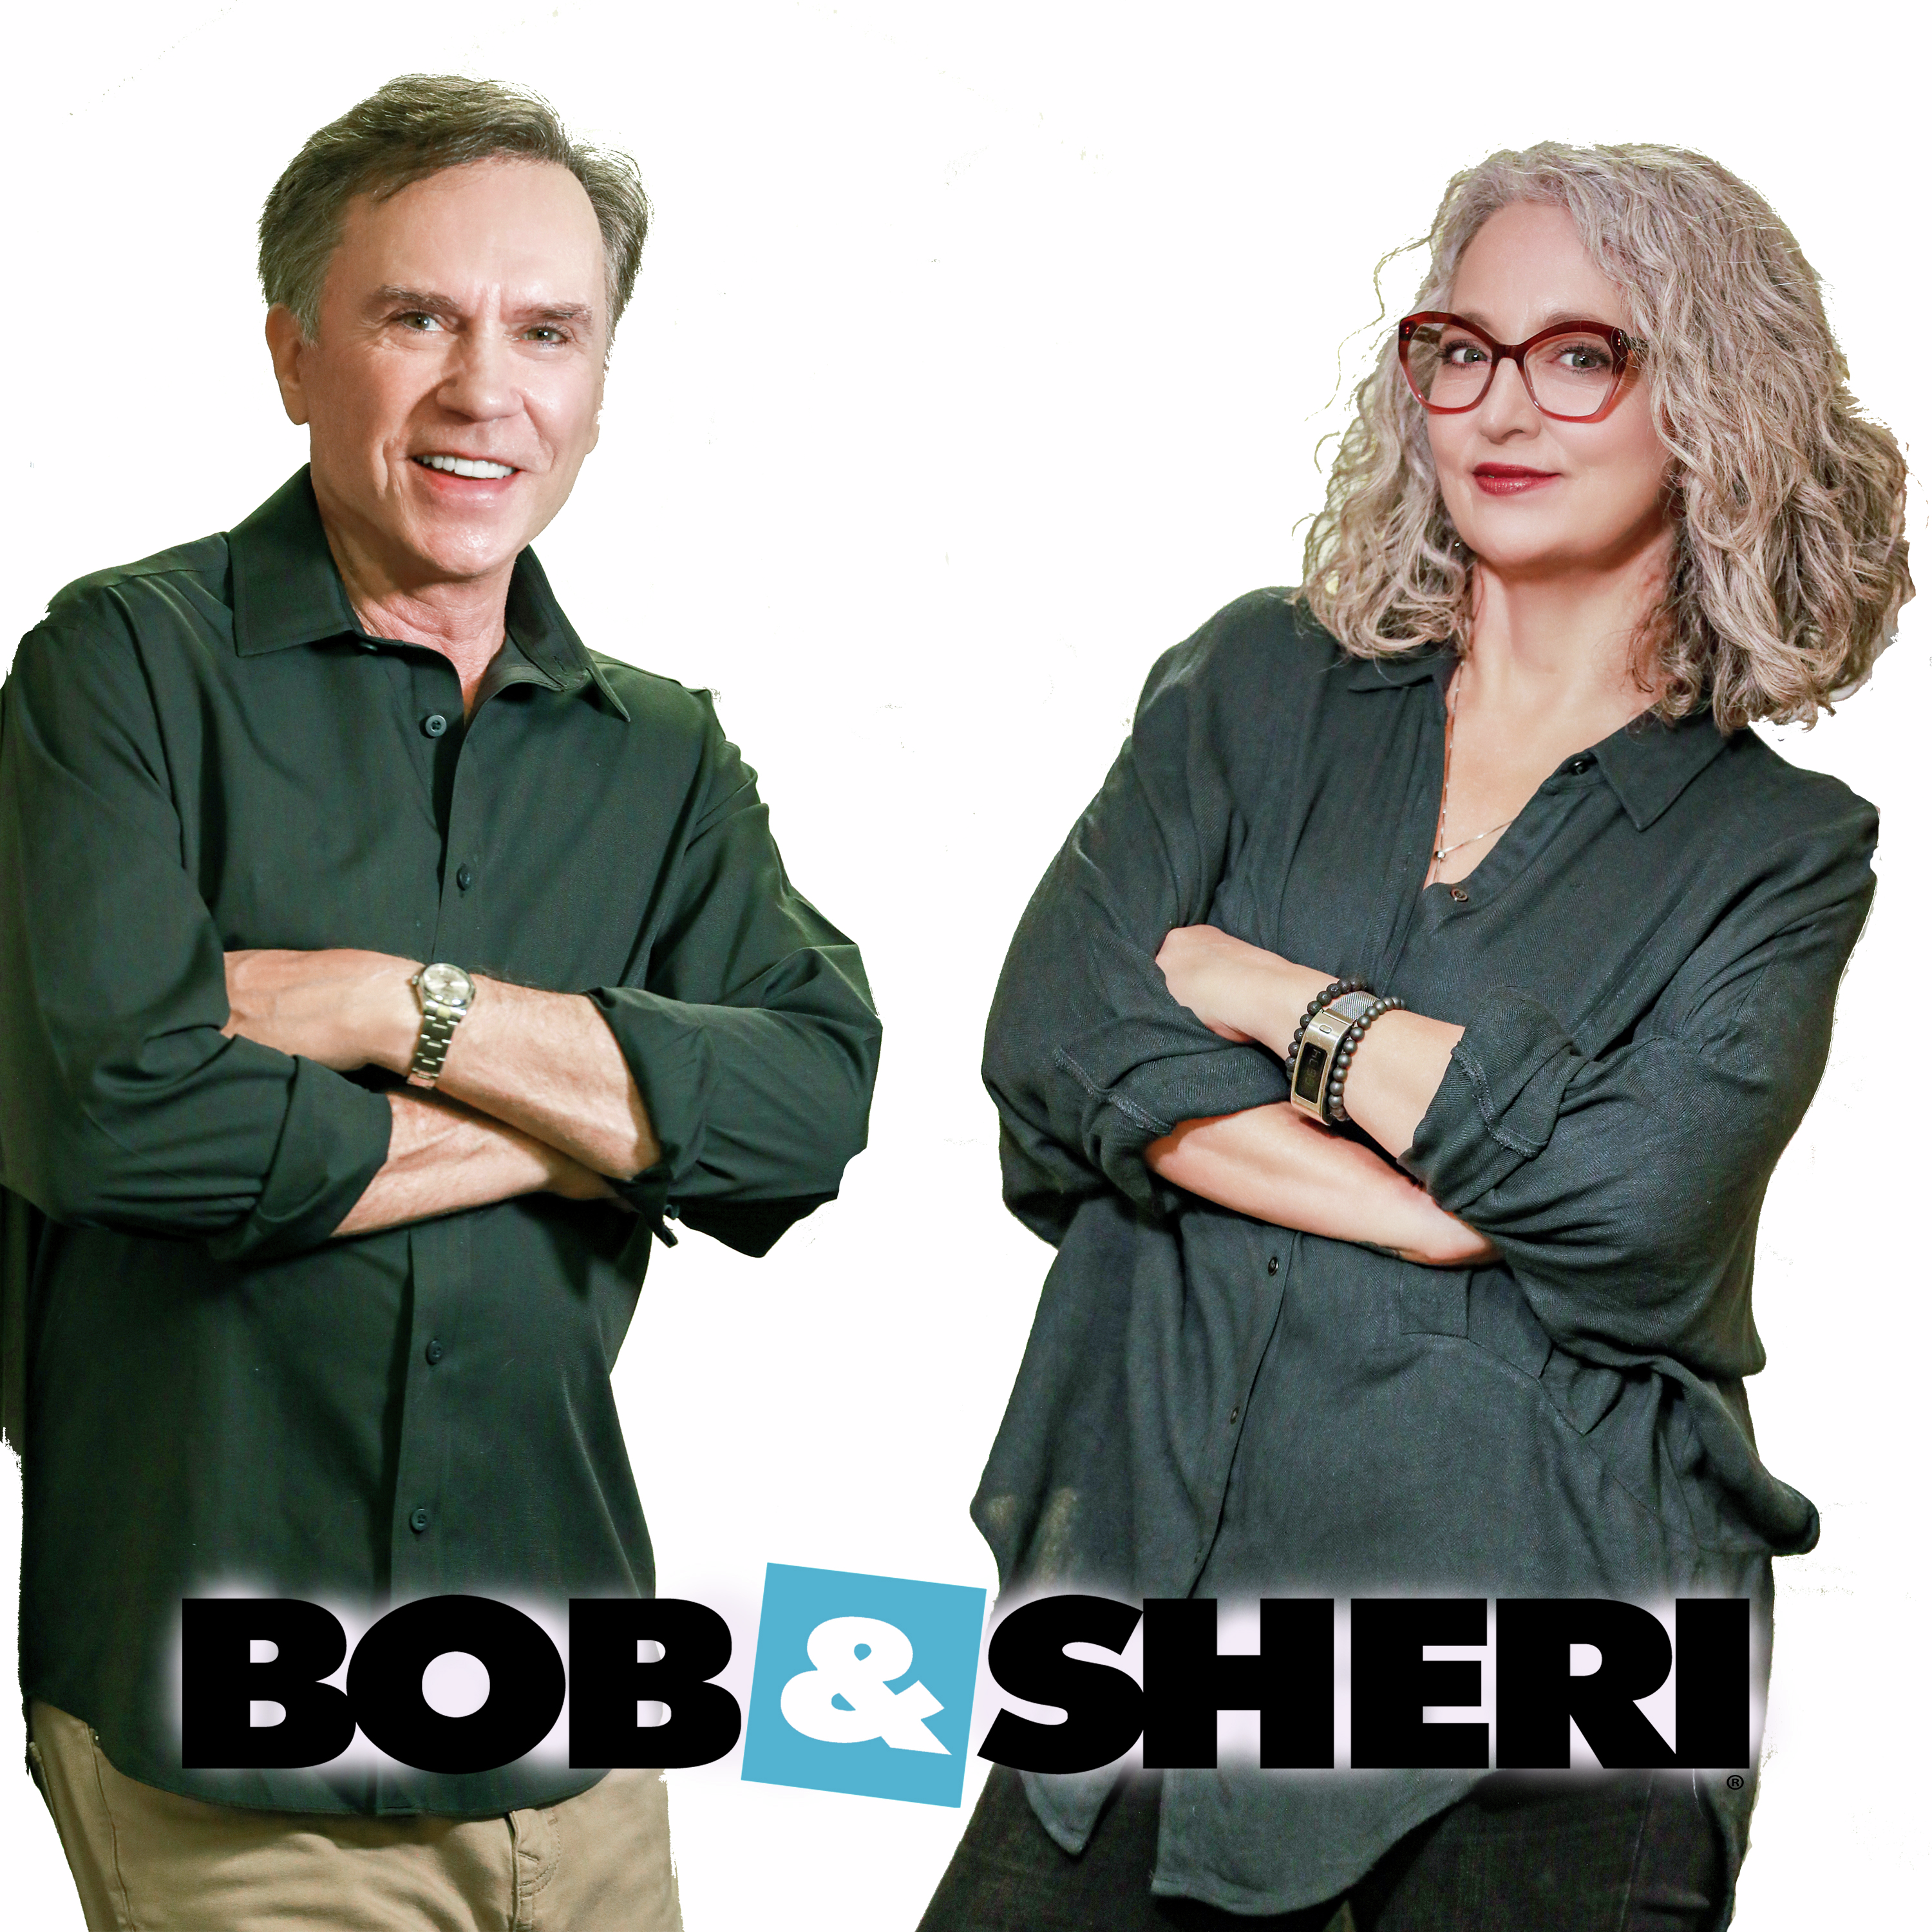 Bob & Sheri